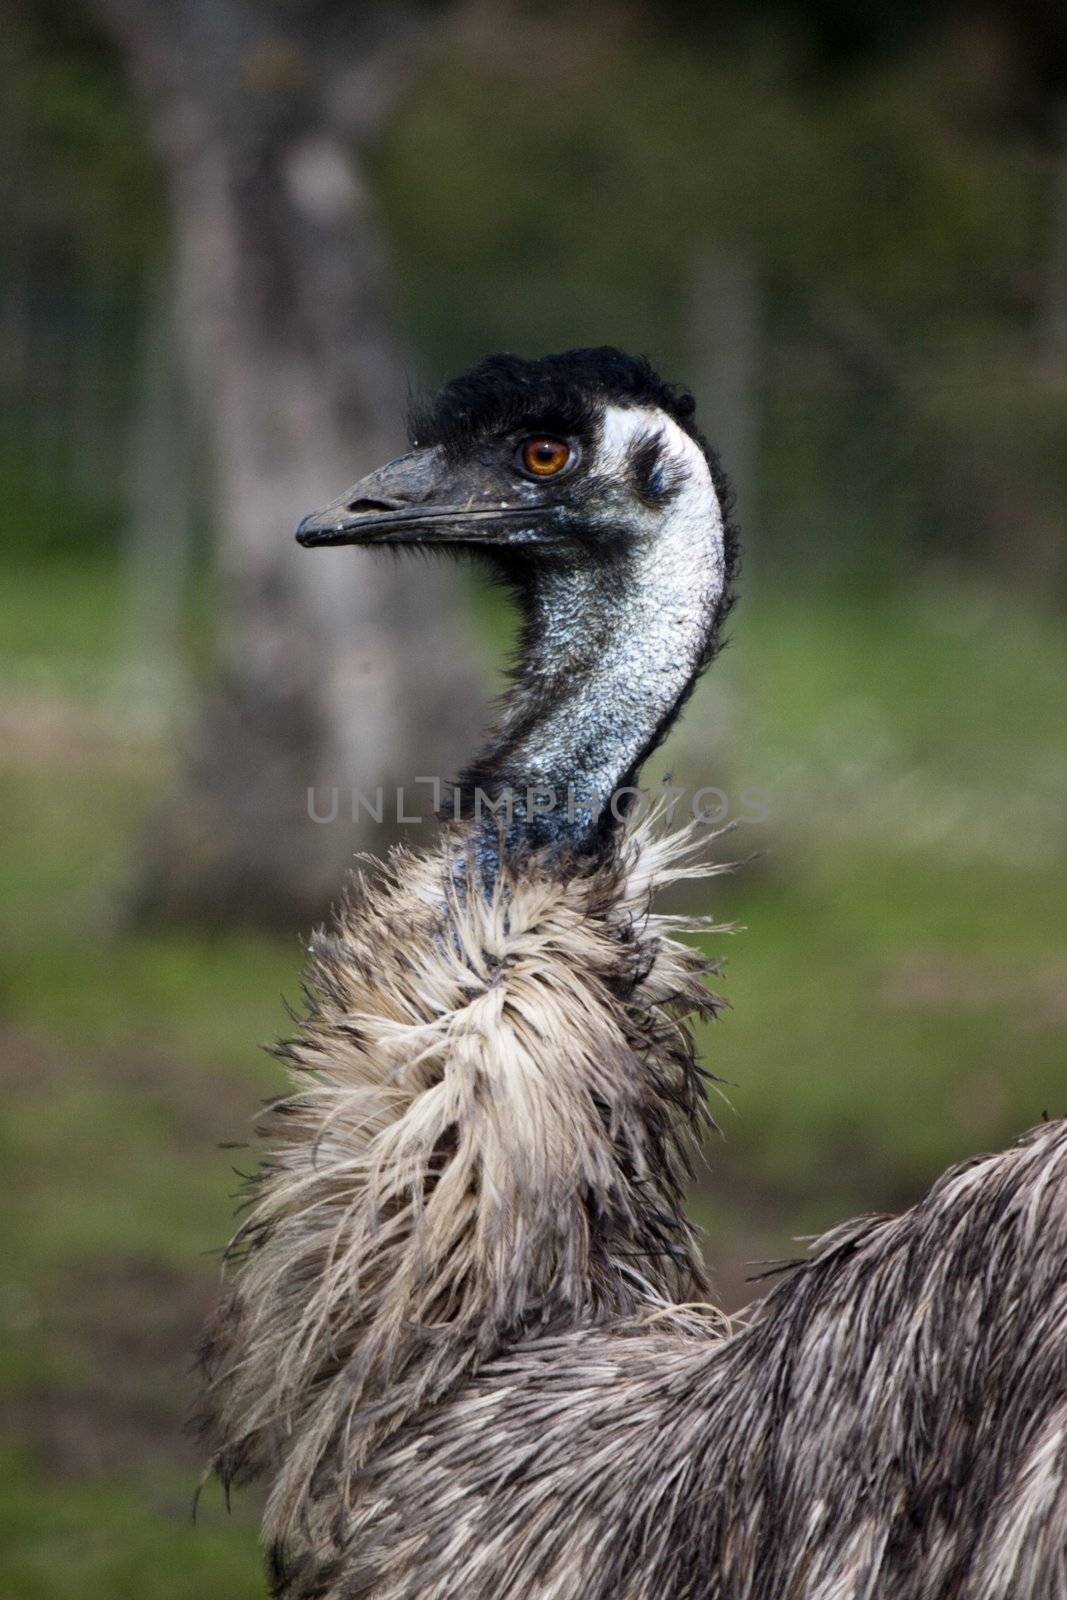 View of a portrait of a curious ostrich.